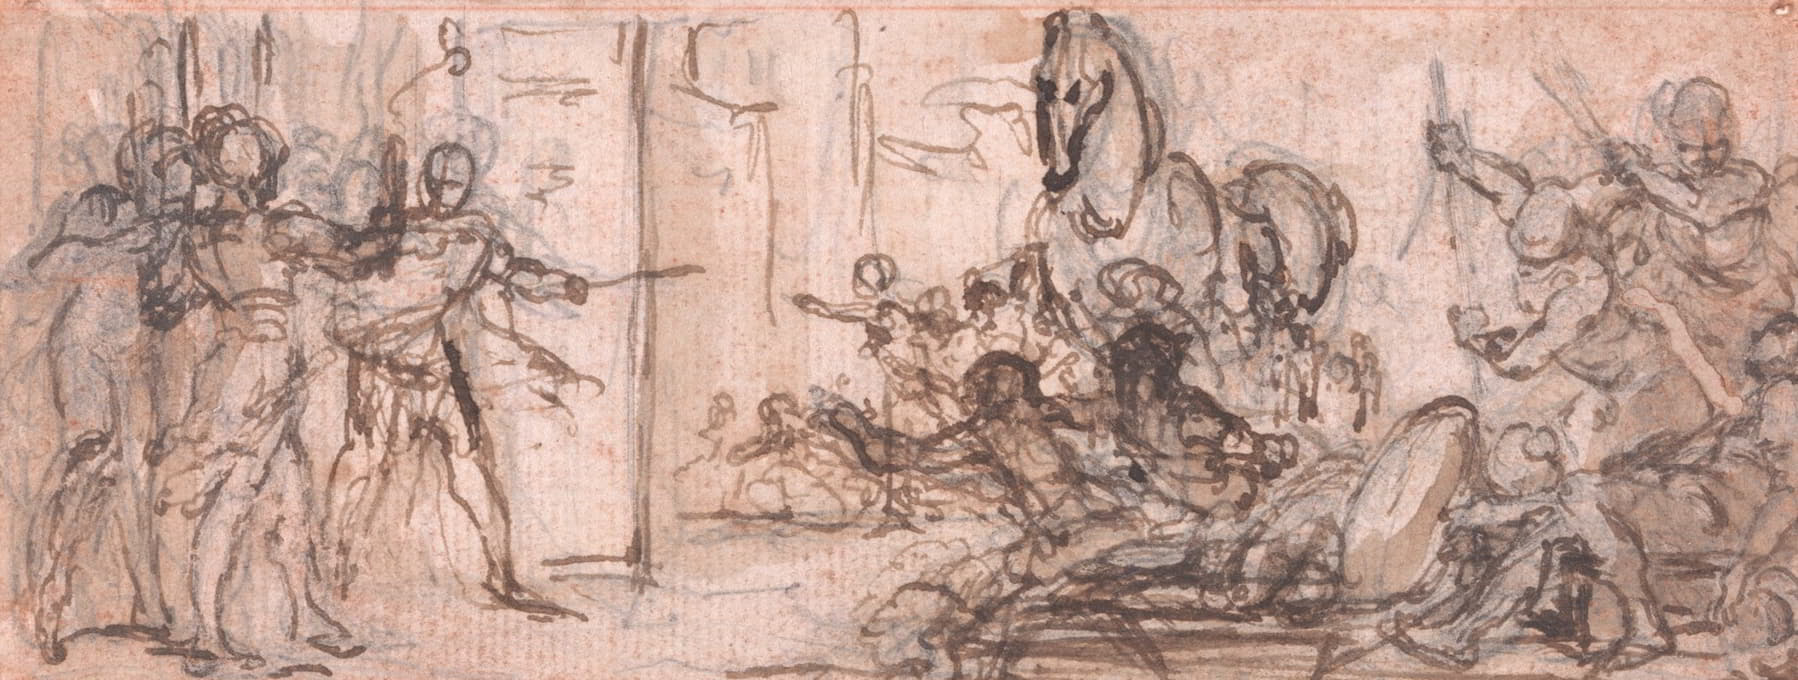 Hubert-François Gravelot - Design for an Engraving; Battle of Troy with the Trojan Horse